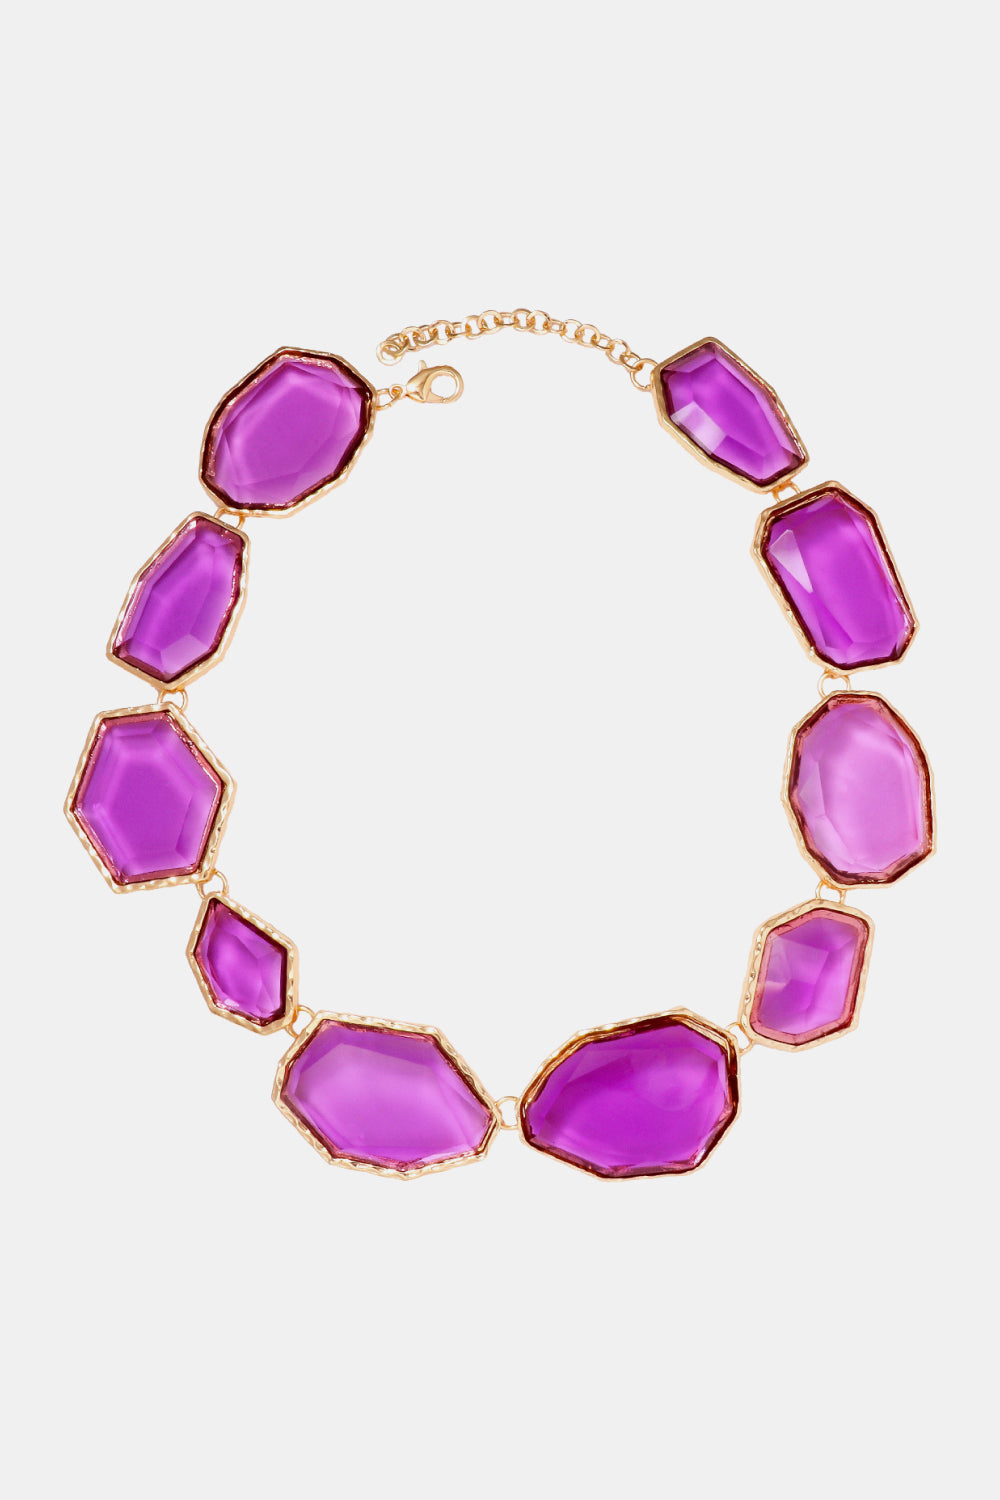 Trendsi Cupid Beauty Supplies Lavender / One Size Women Necklace Geometrical Shape Zinc Alloy Frame Resin Necklace